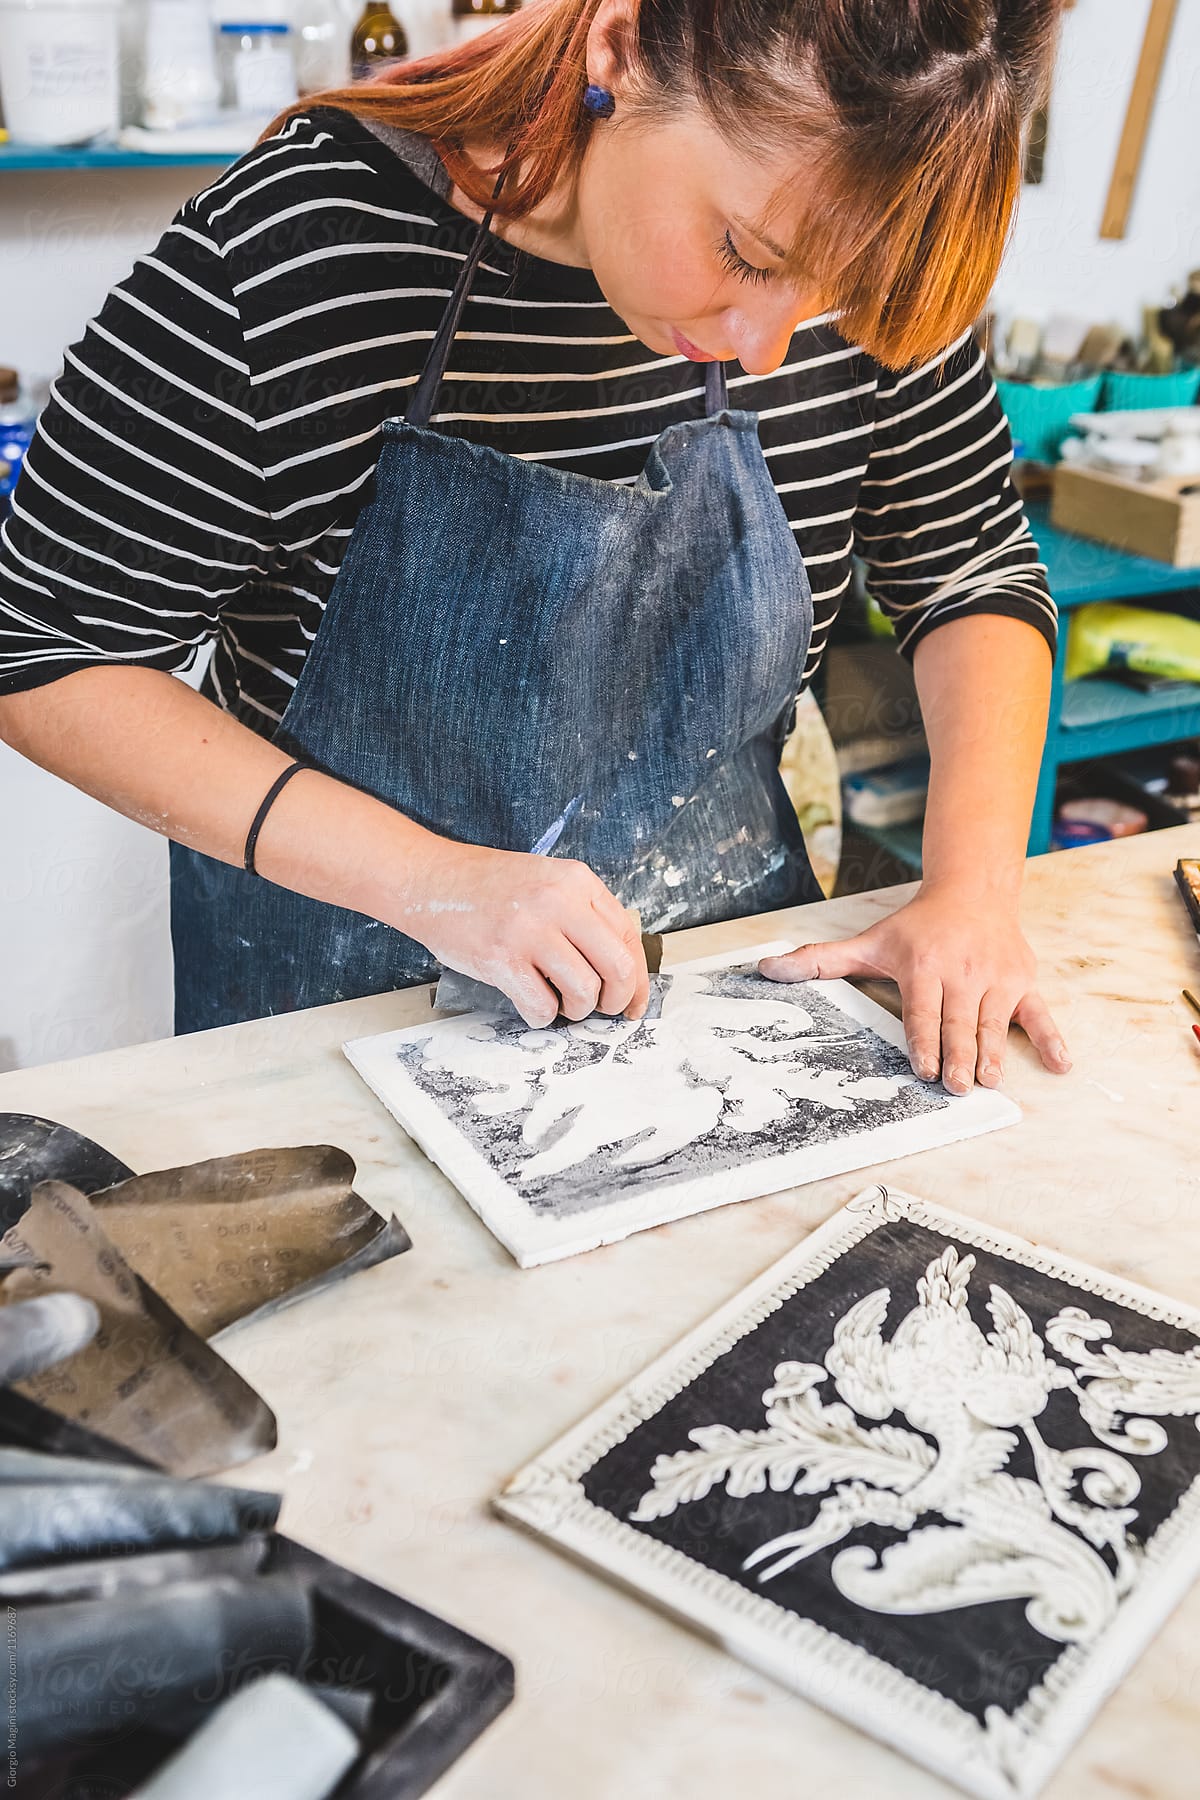 Artisan Woman Using Sandpaper on a Scagliola Artwork